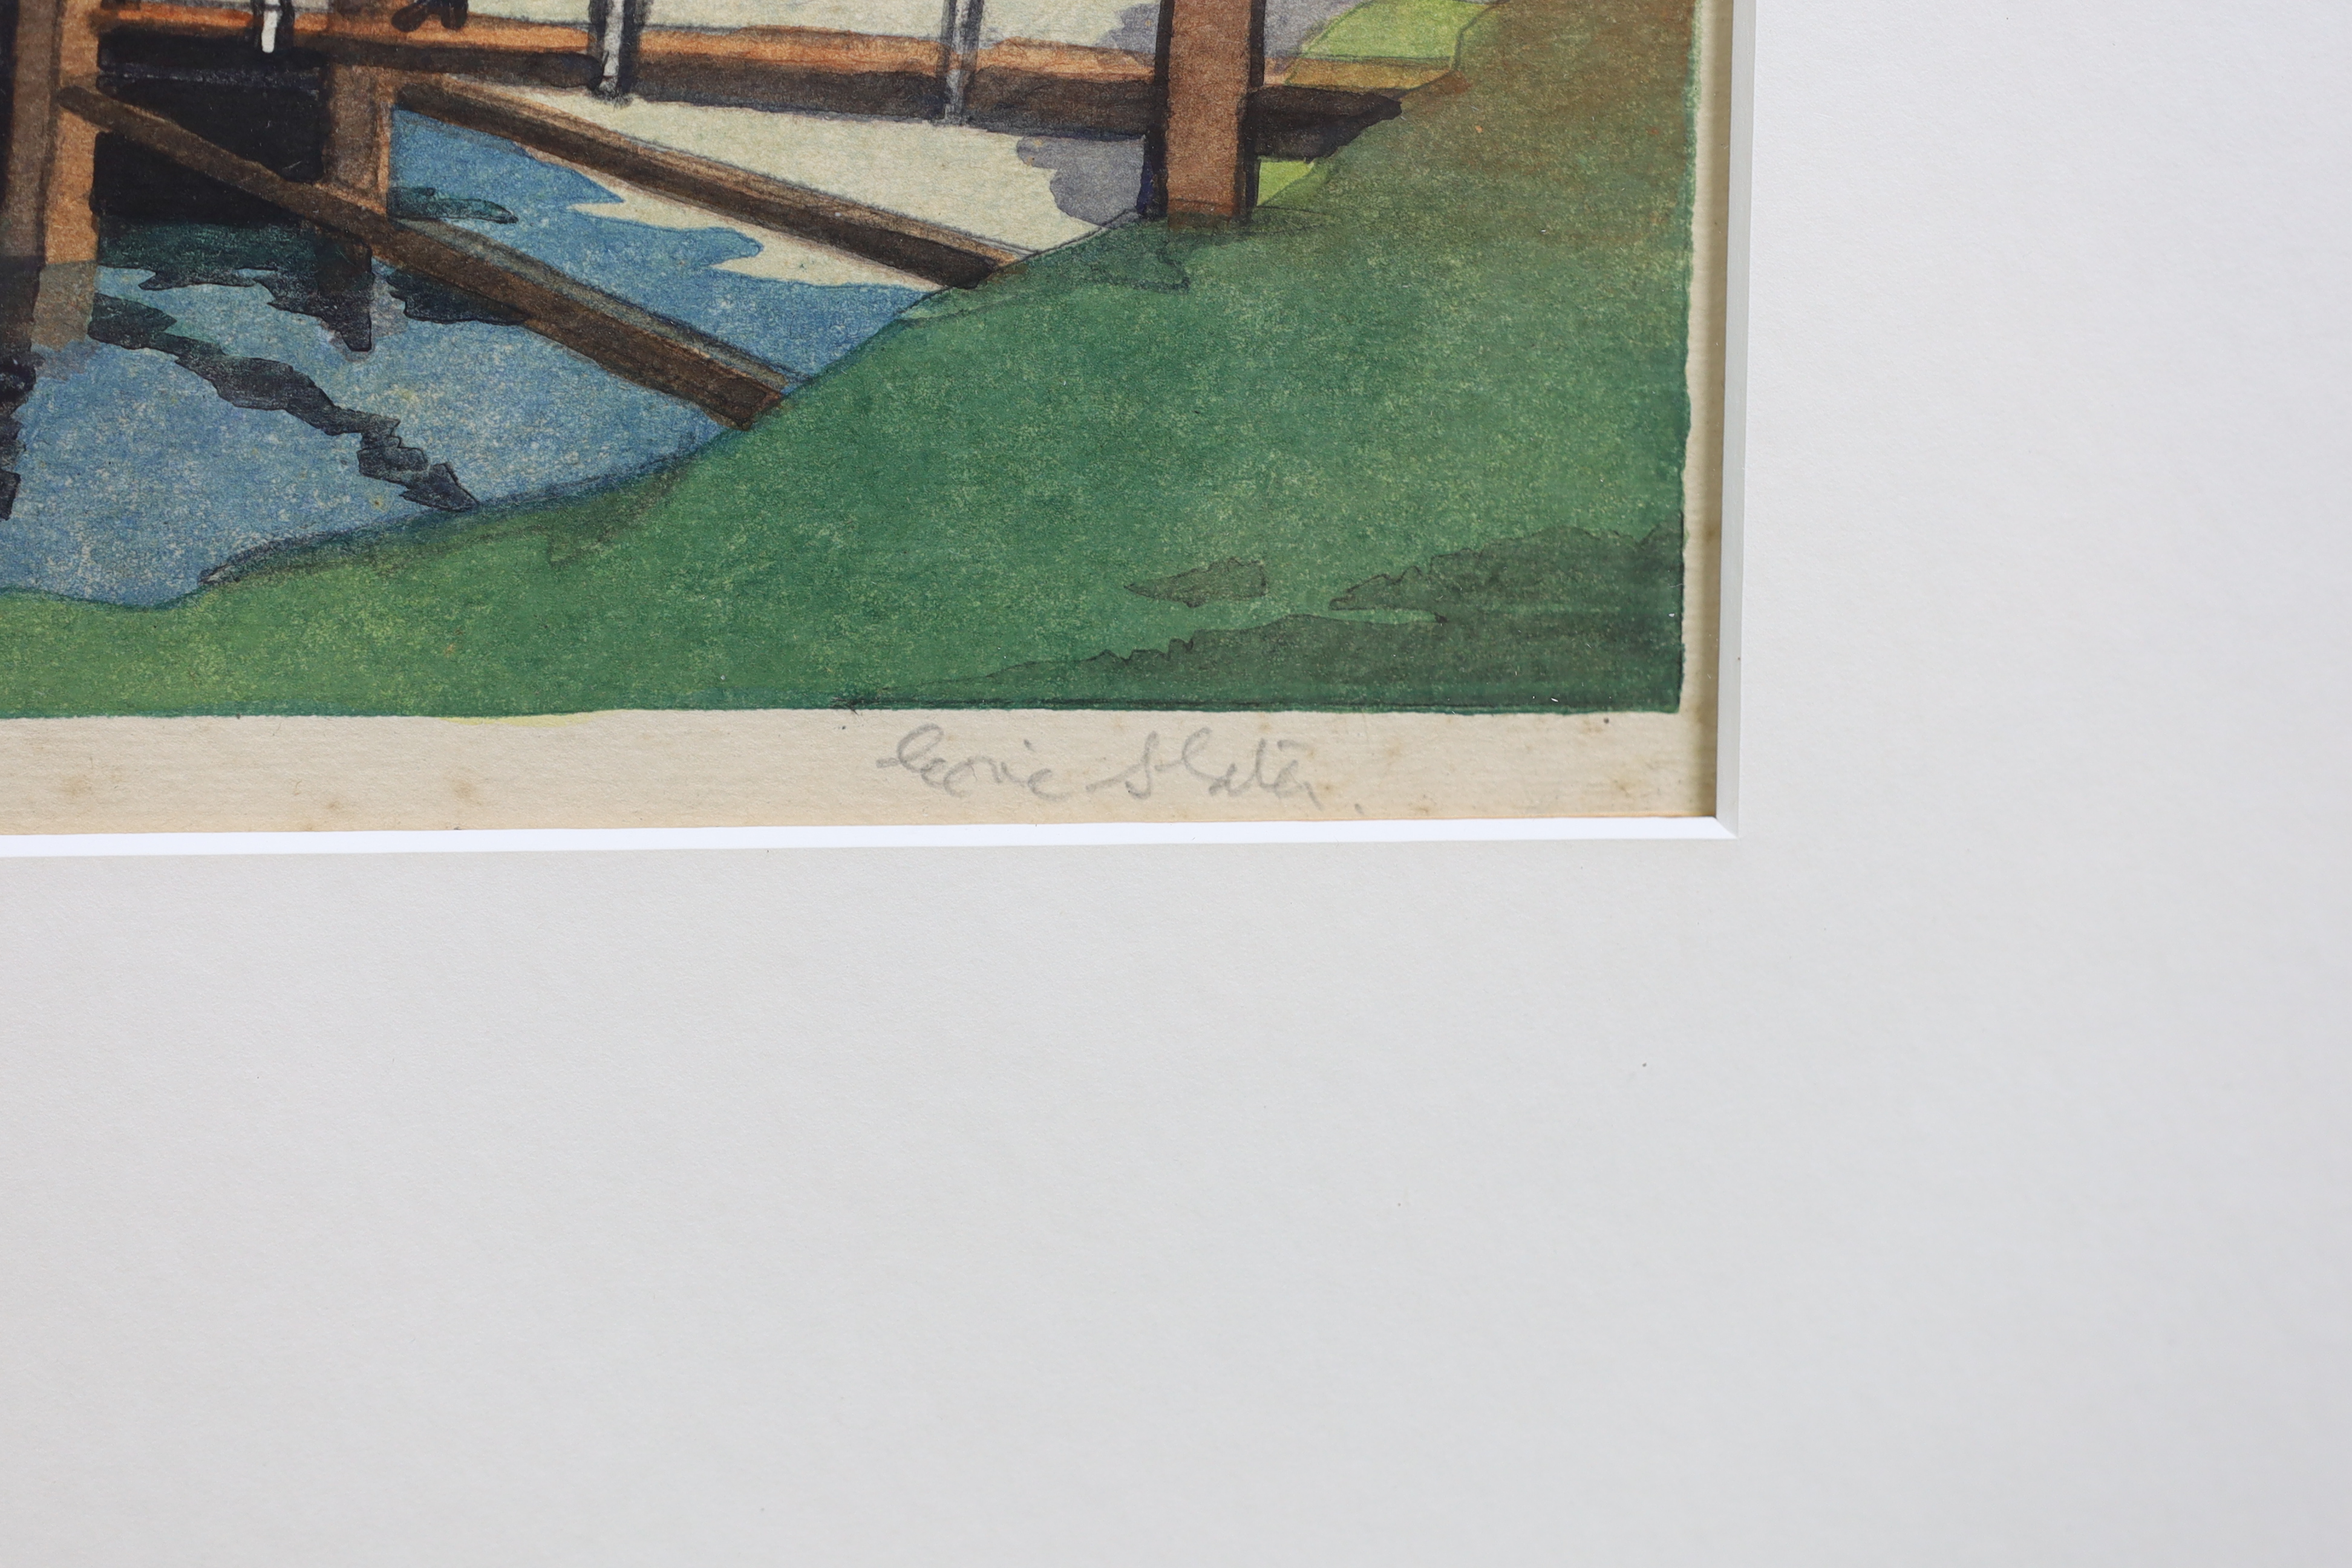 Eric Slater (British, 1896-1963), 'Morning Calm', wood engraving, 27 x 36.5cm